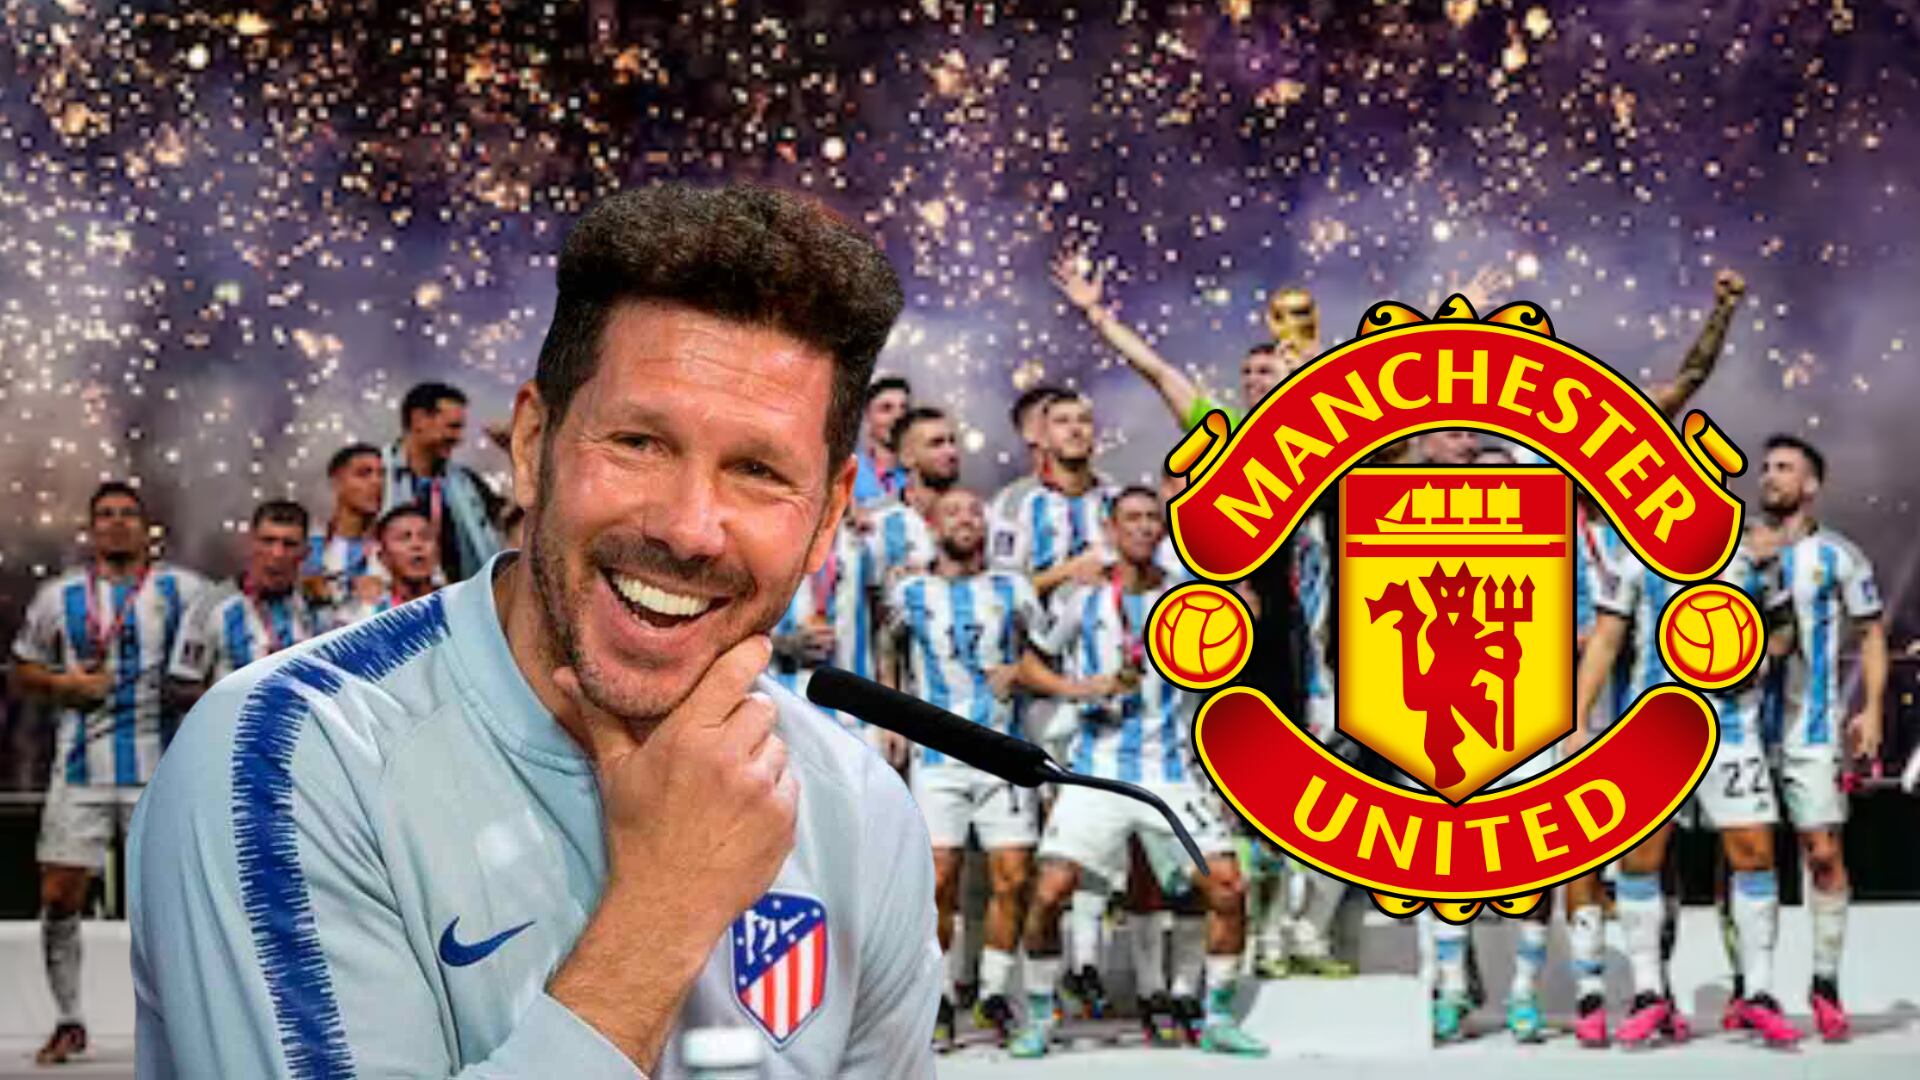 Lo quiere United, Atleti pone 20 millones por robarse figura internacional argentina